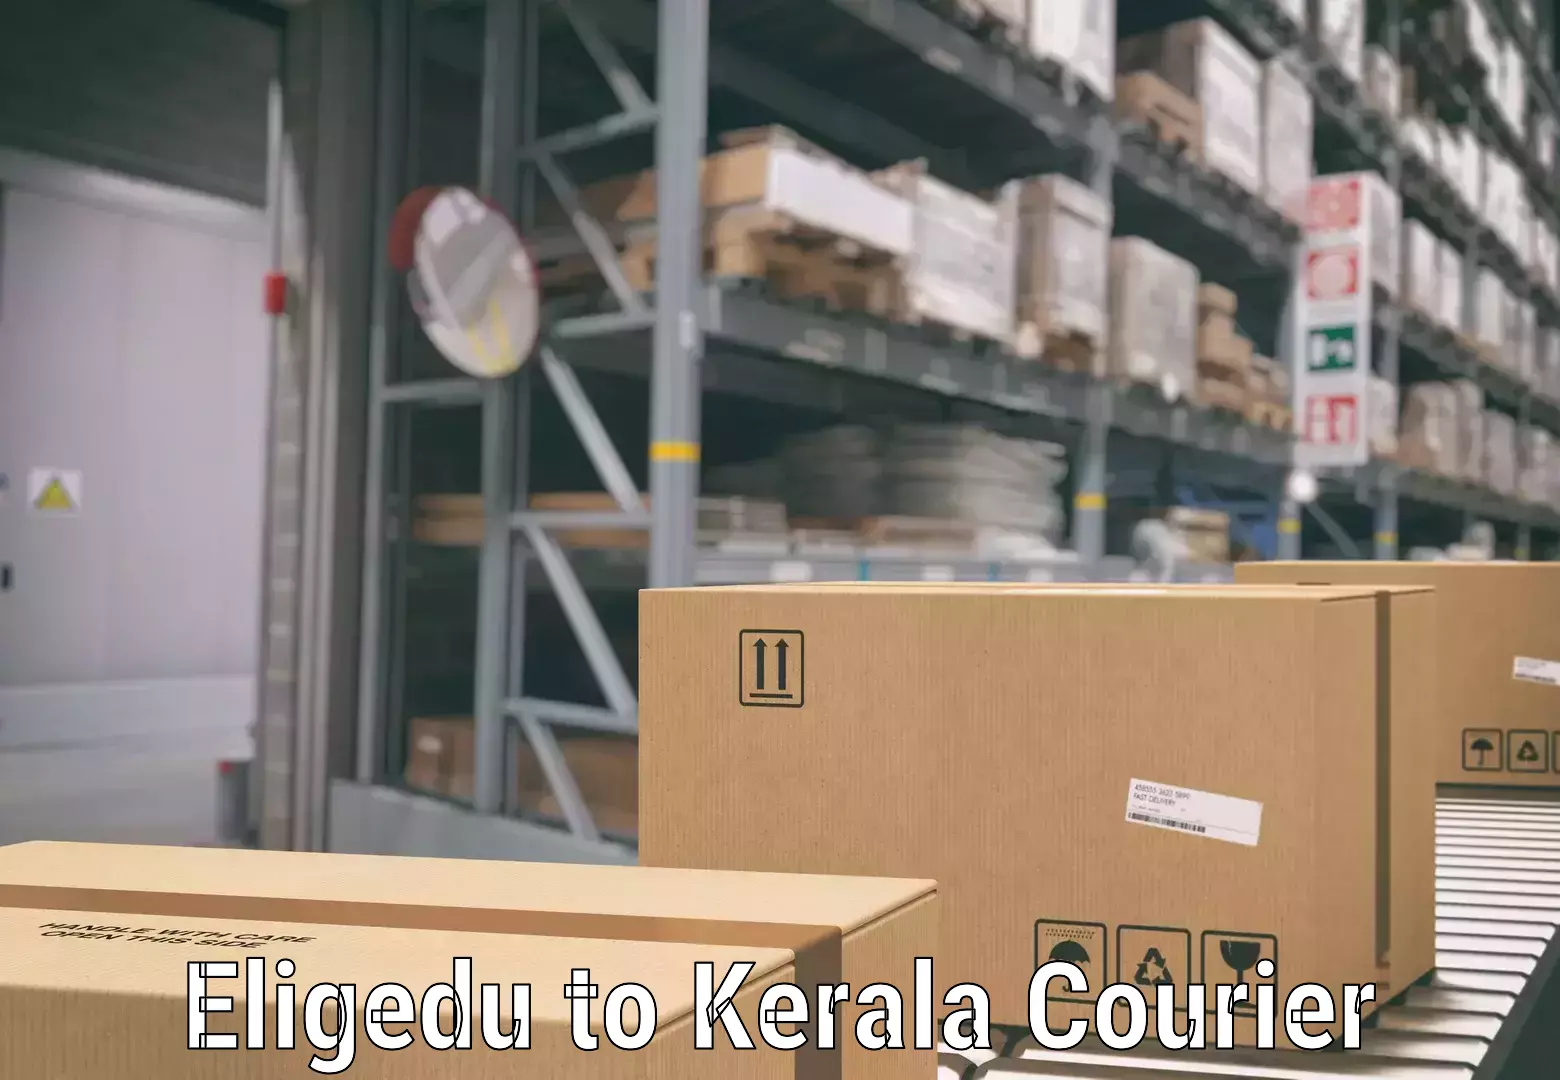 Regional luggage transport Eligedu to Kerala